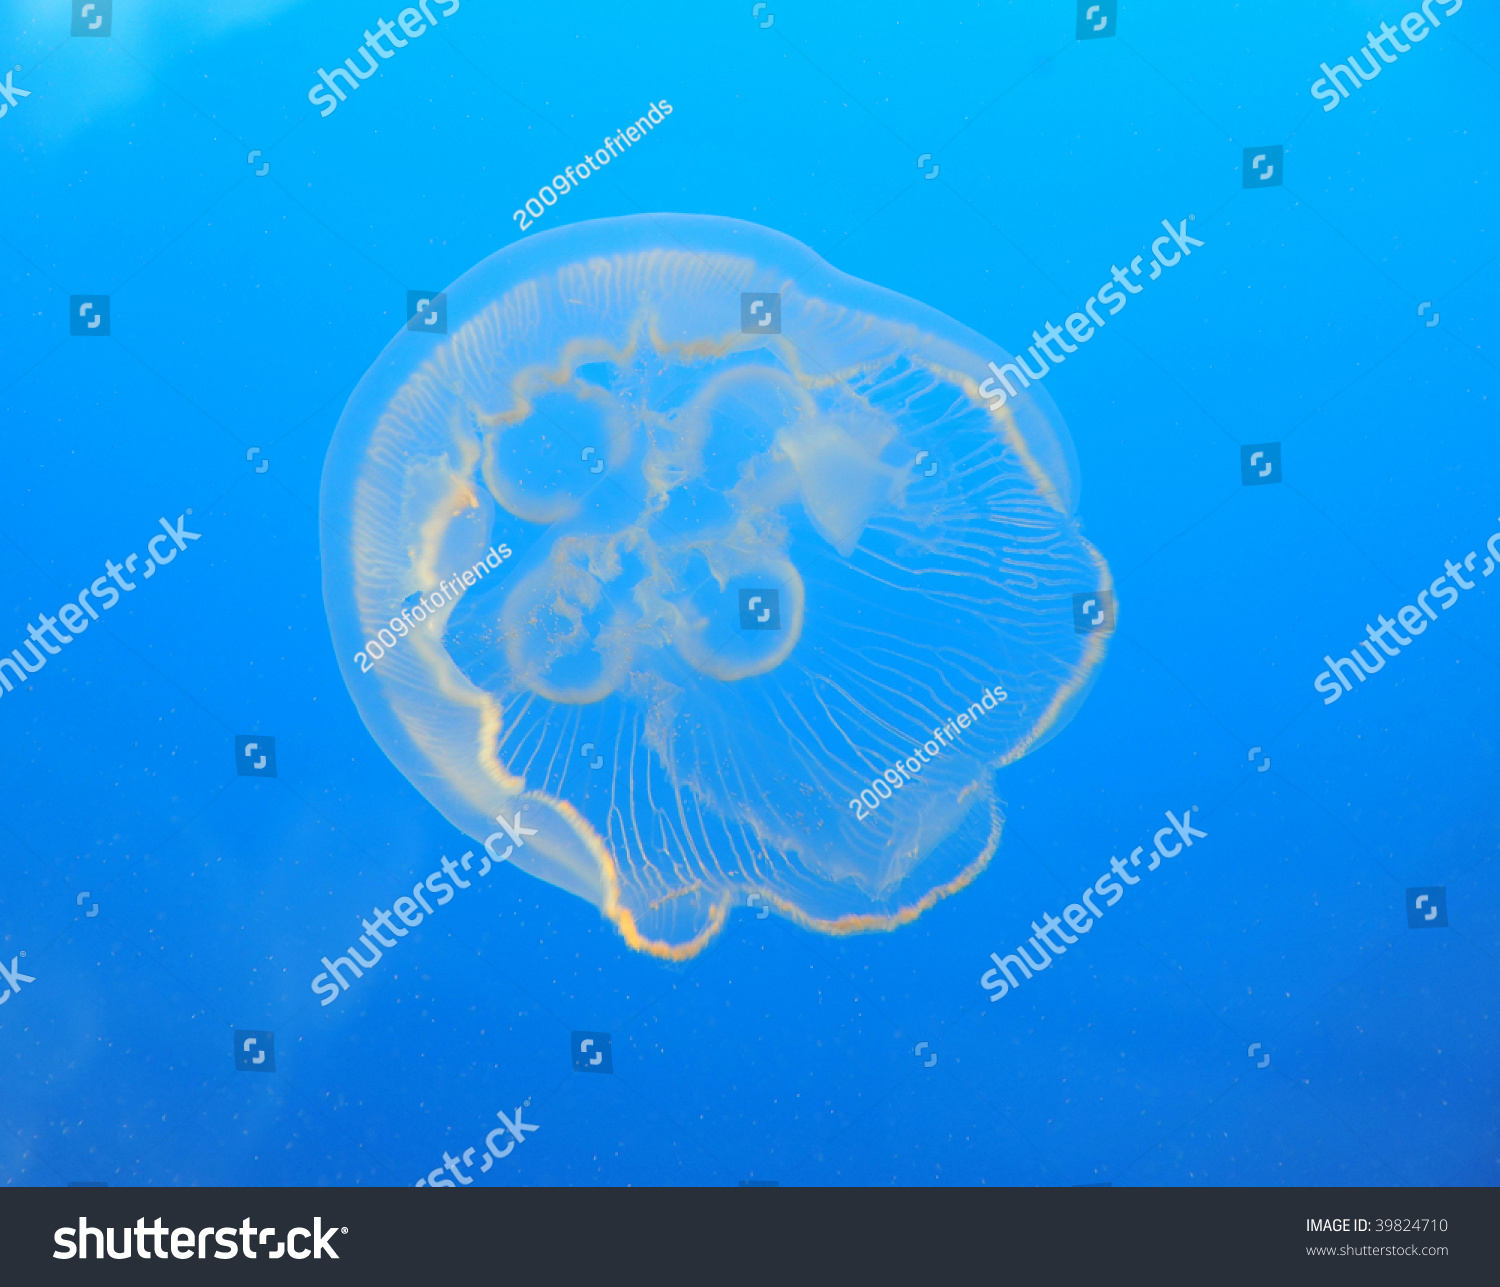 Detailed Look Jellyfish Blue Ocean Stock Photo 39824710 - Shutterstock